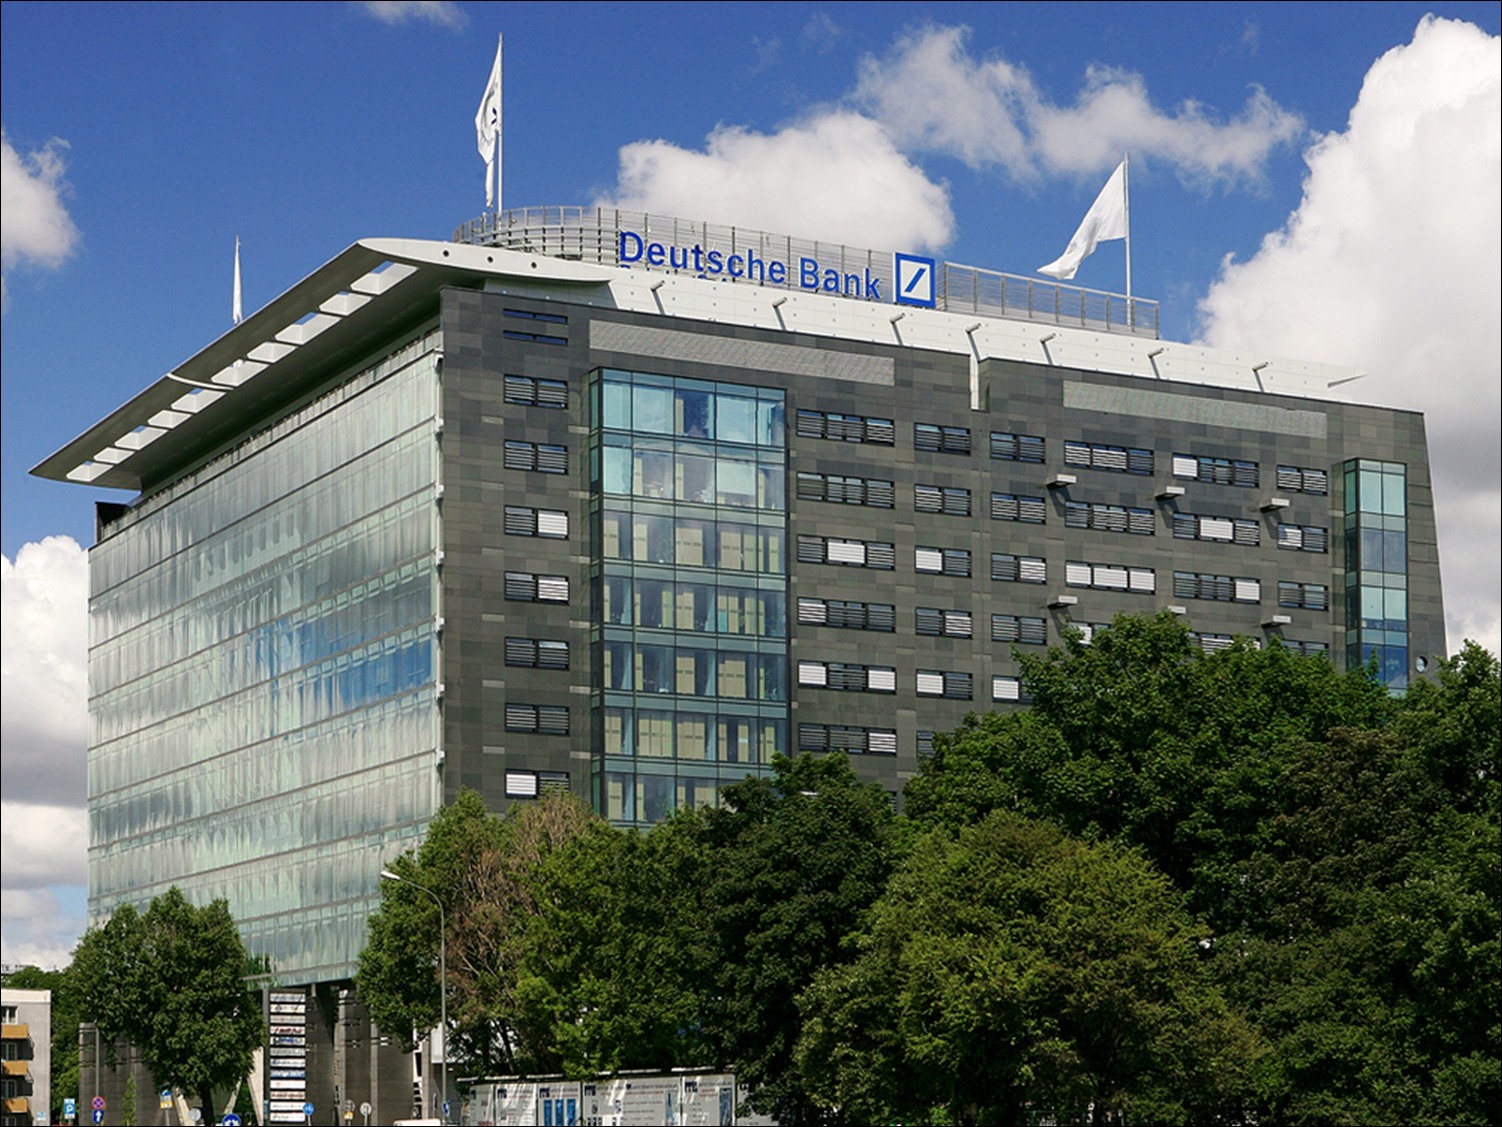 Deutsche Bank to cut 18,000 jobs in £6.6bn restructuring move